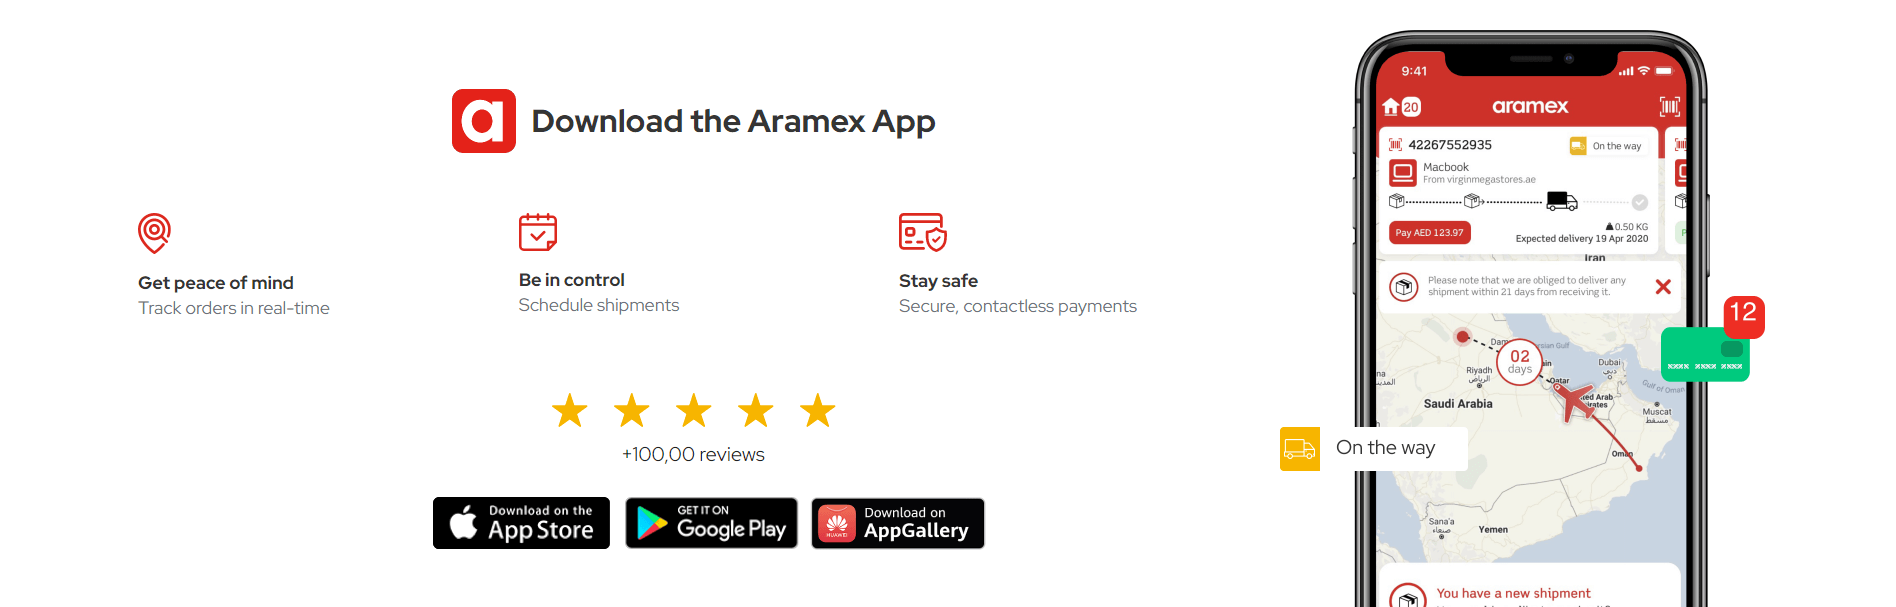 Aramex mobile app